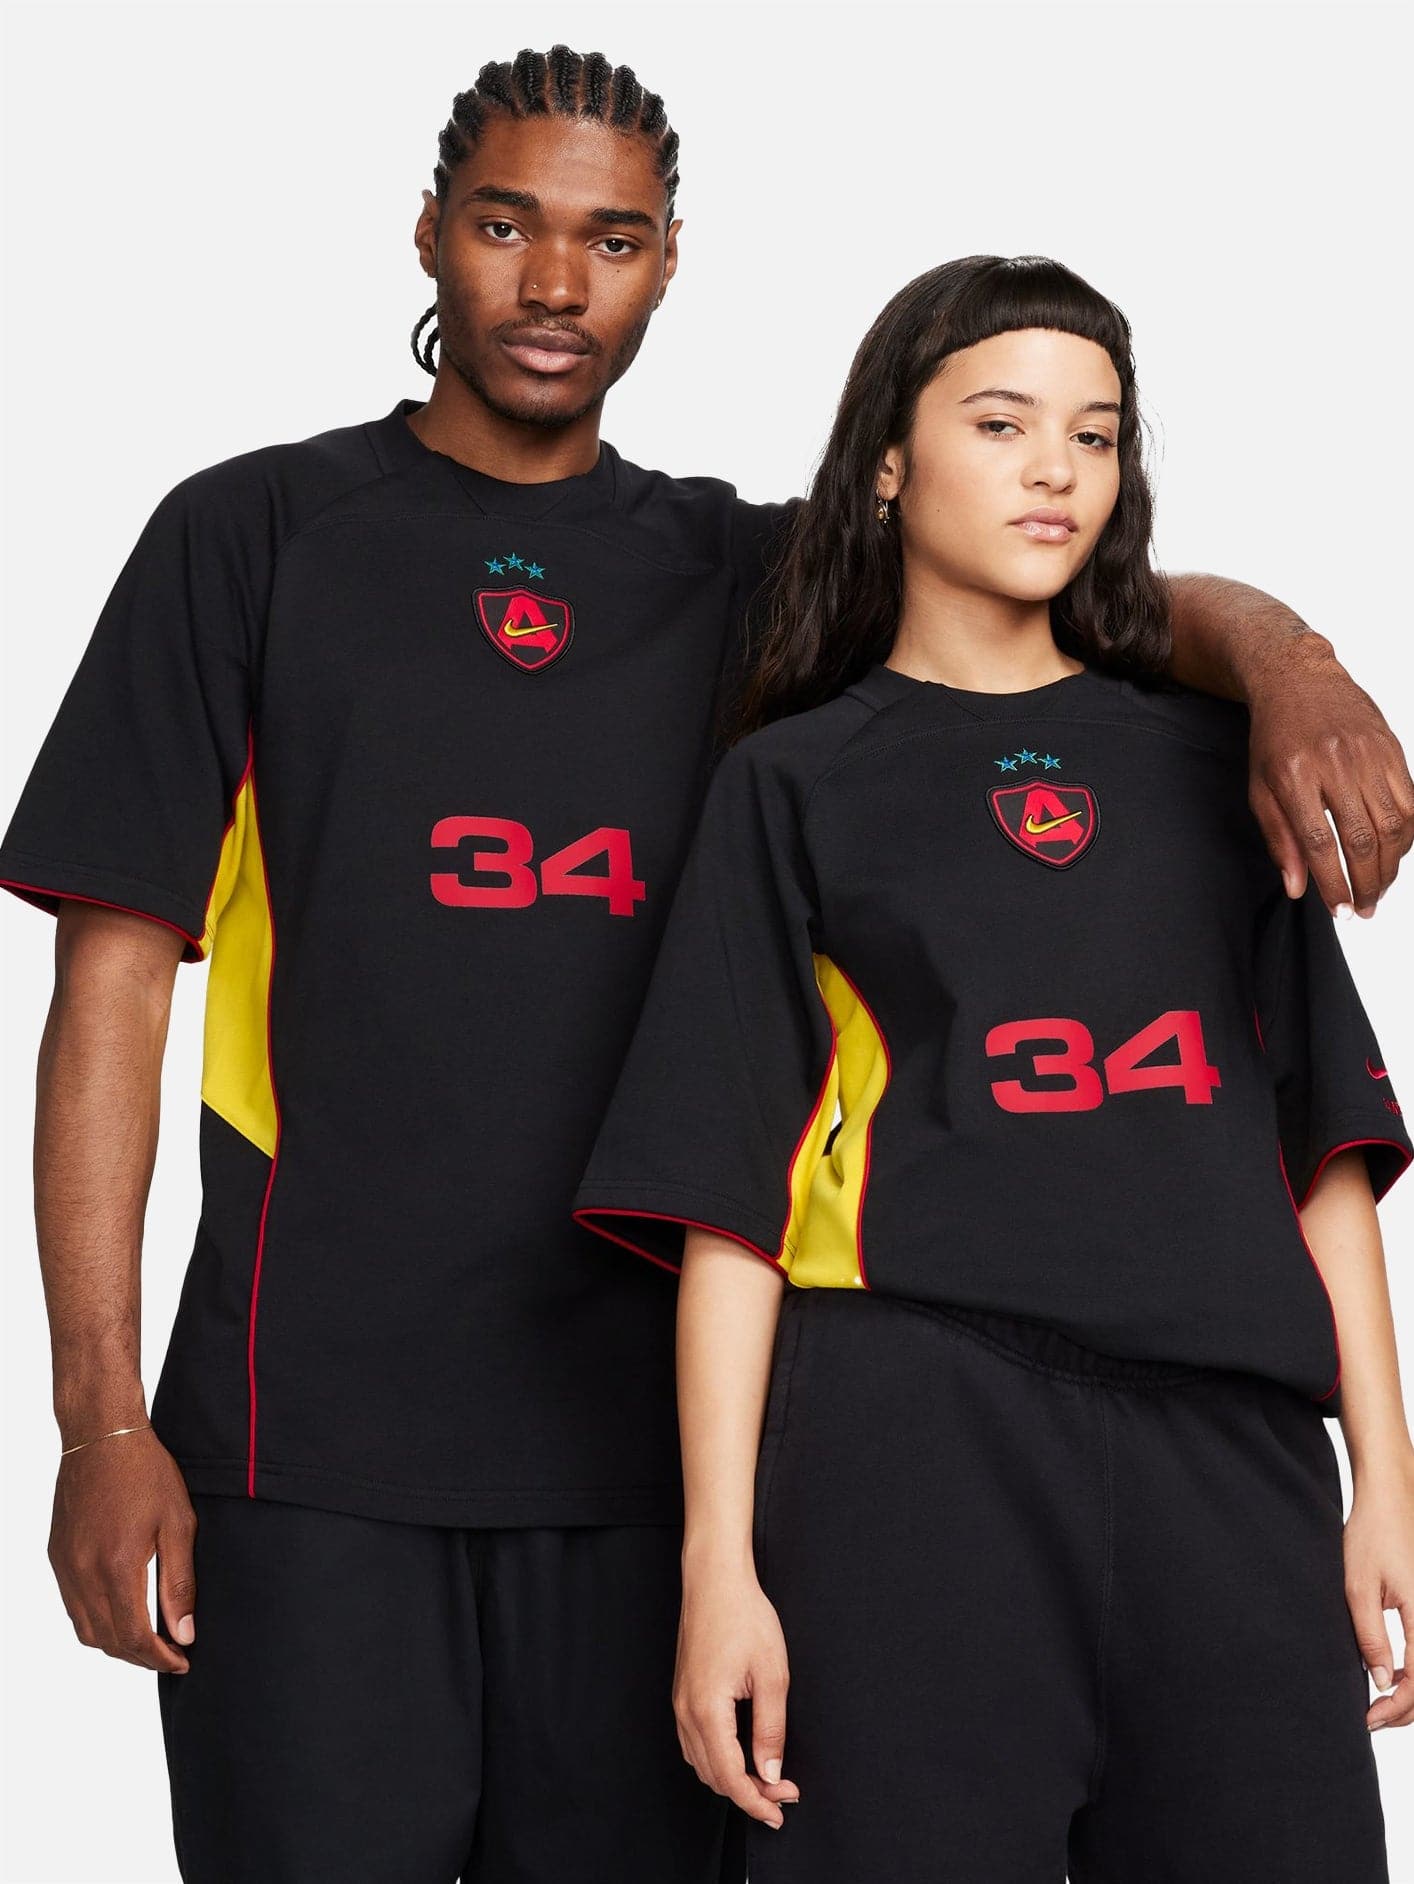 Nike x AMBUSH Uniform Top Black Mサイズ - その他